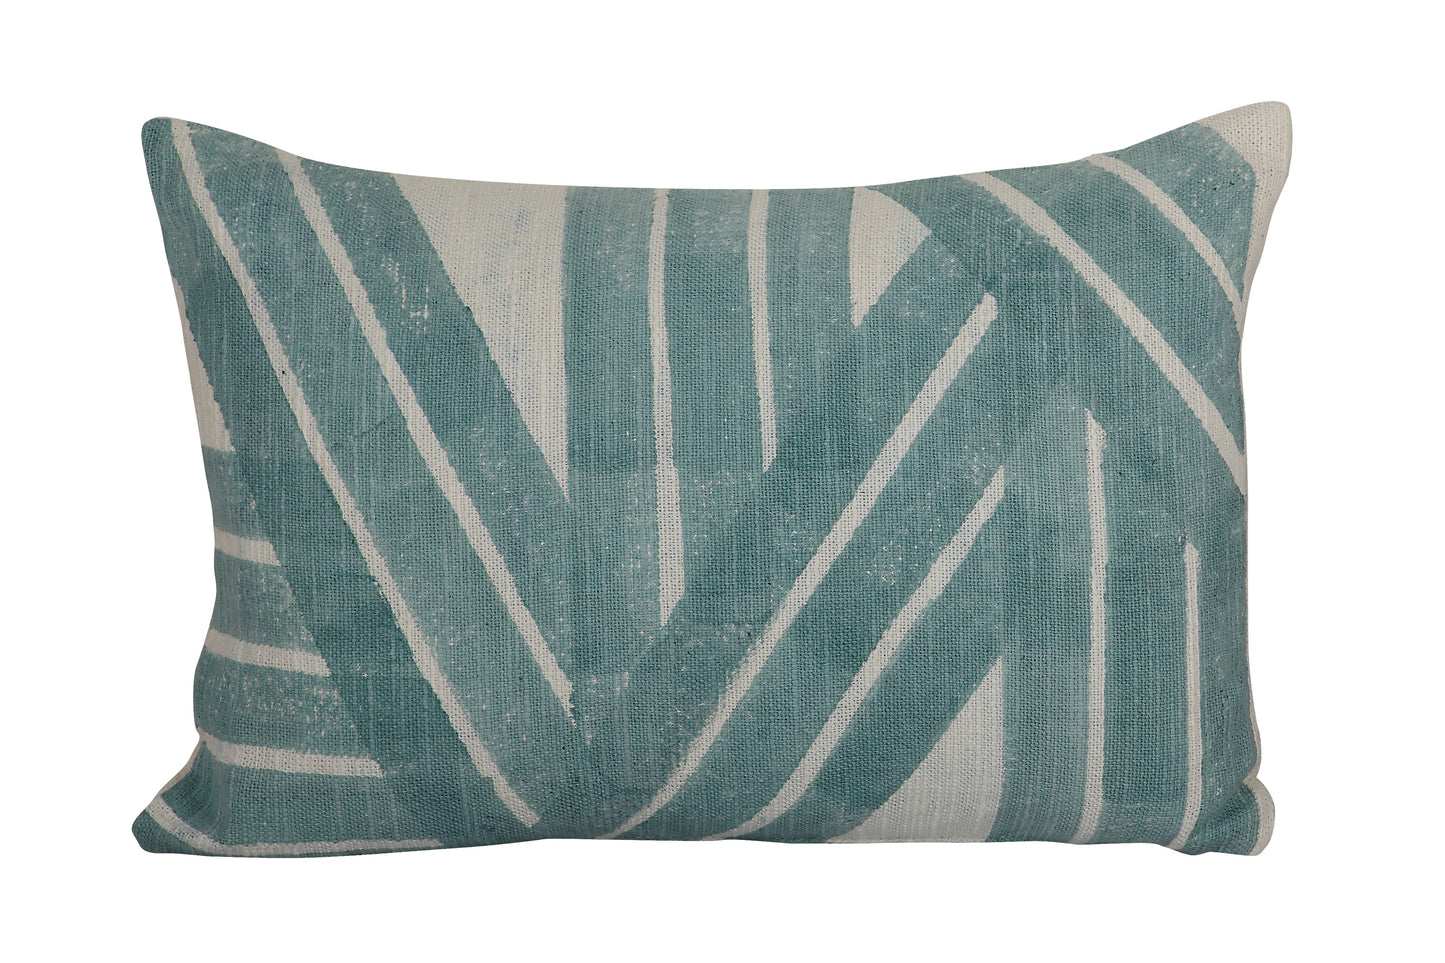 Aqua Stripes Rectangular Pillow